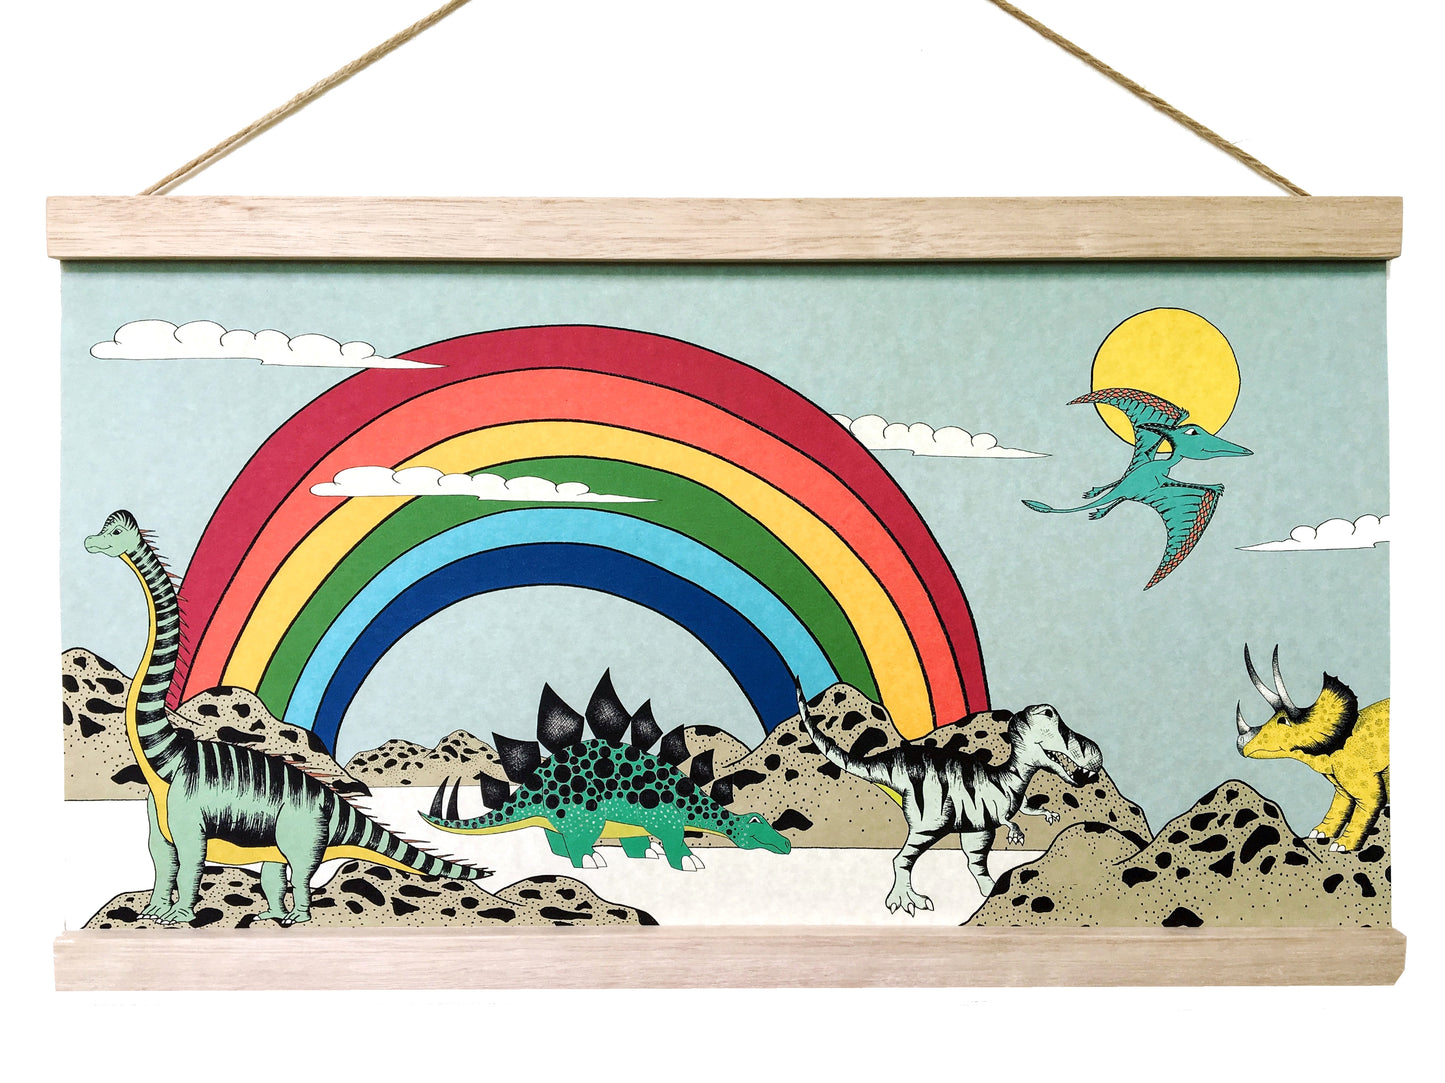 Art Hanger Rainbow Dinosaur Dreaming